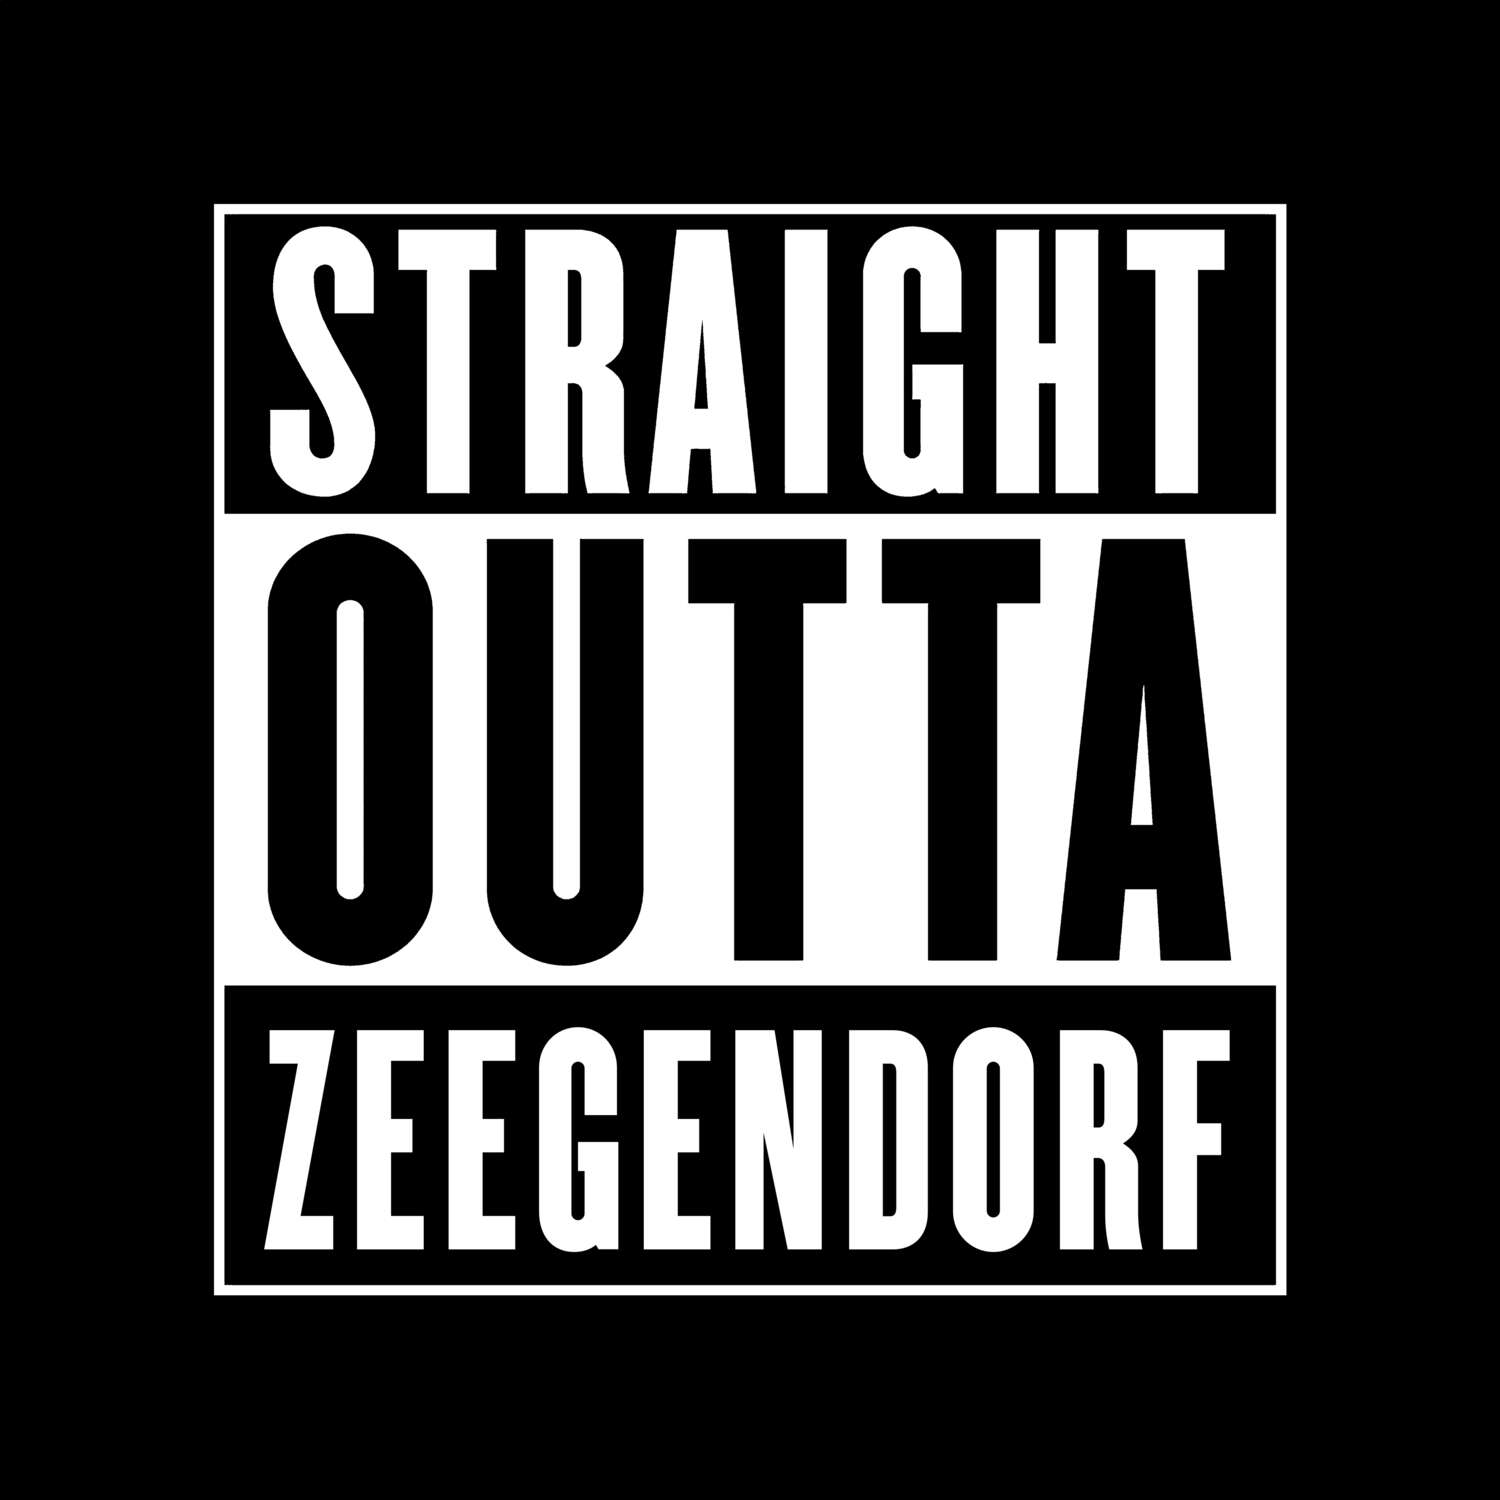 Zeegendorf T-Shirt »Straight Outta«